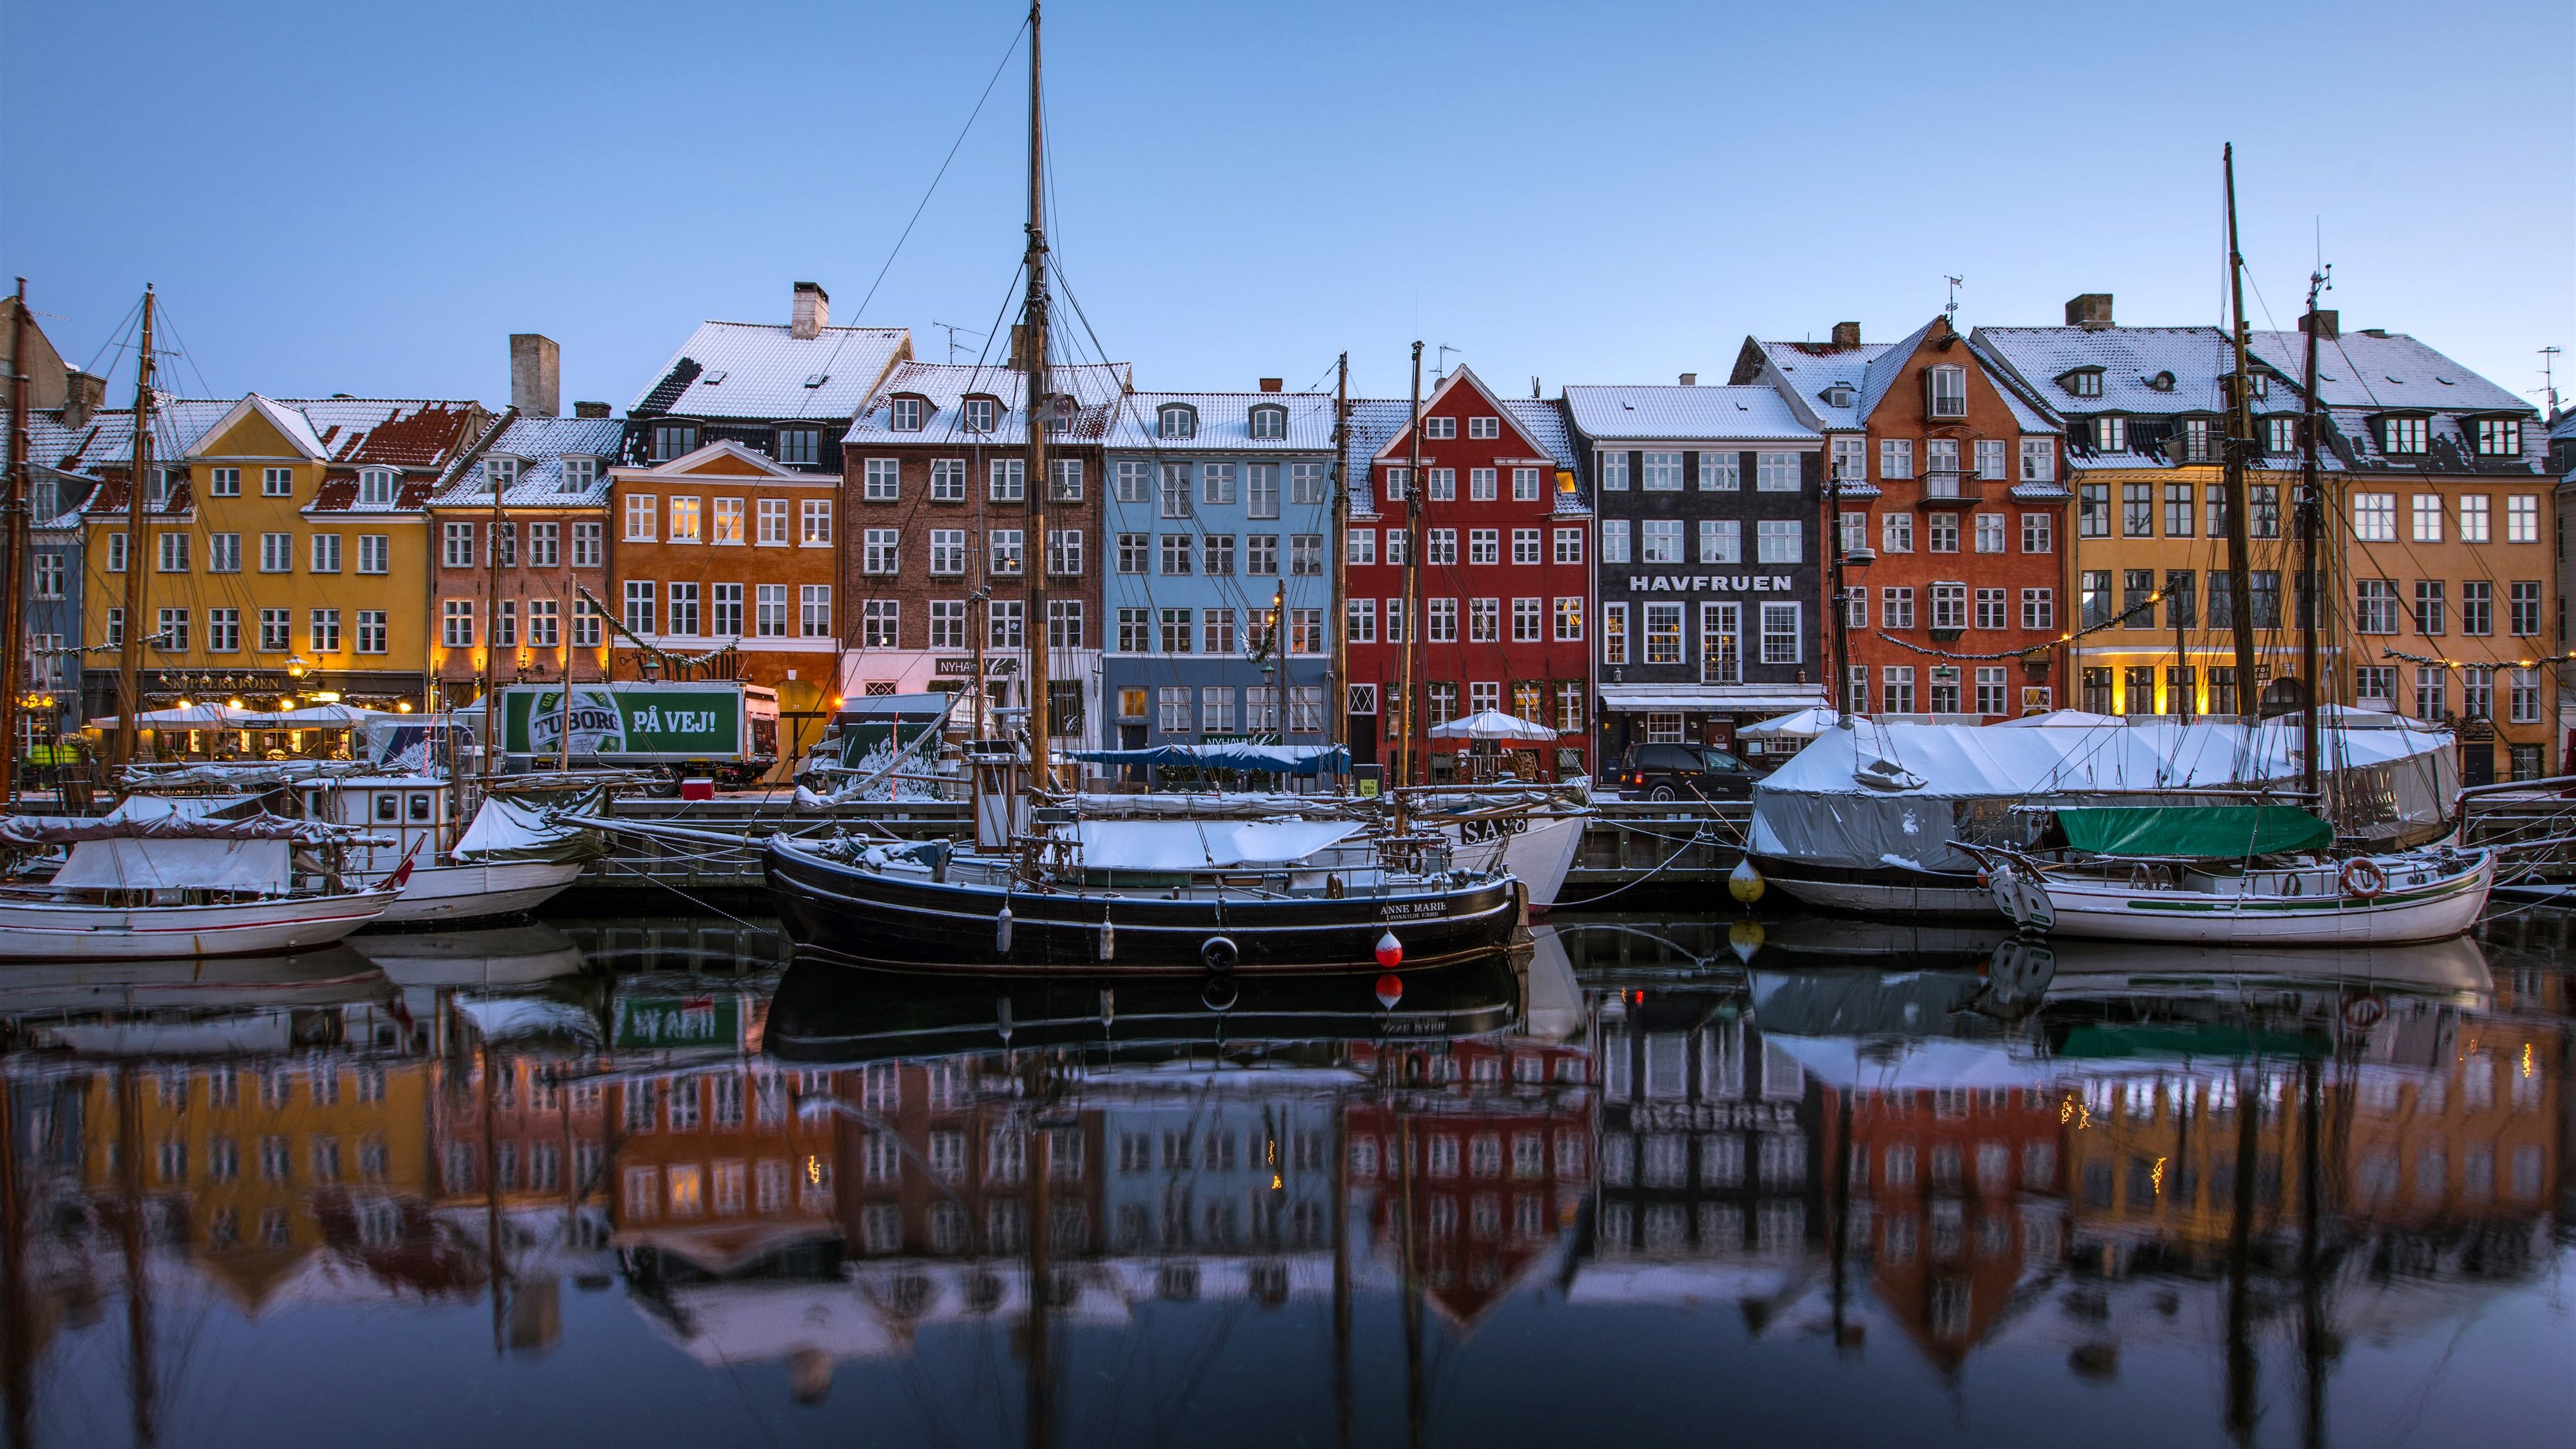 Wallpaper Copenhagen, Denmark, New Harbor, boats, houses, colors, snow, winter 5120x2880 UHD 5K Picture, Image